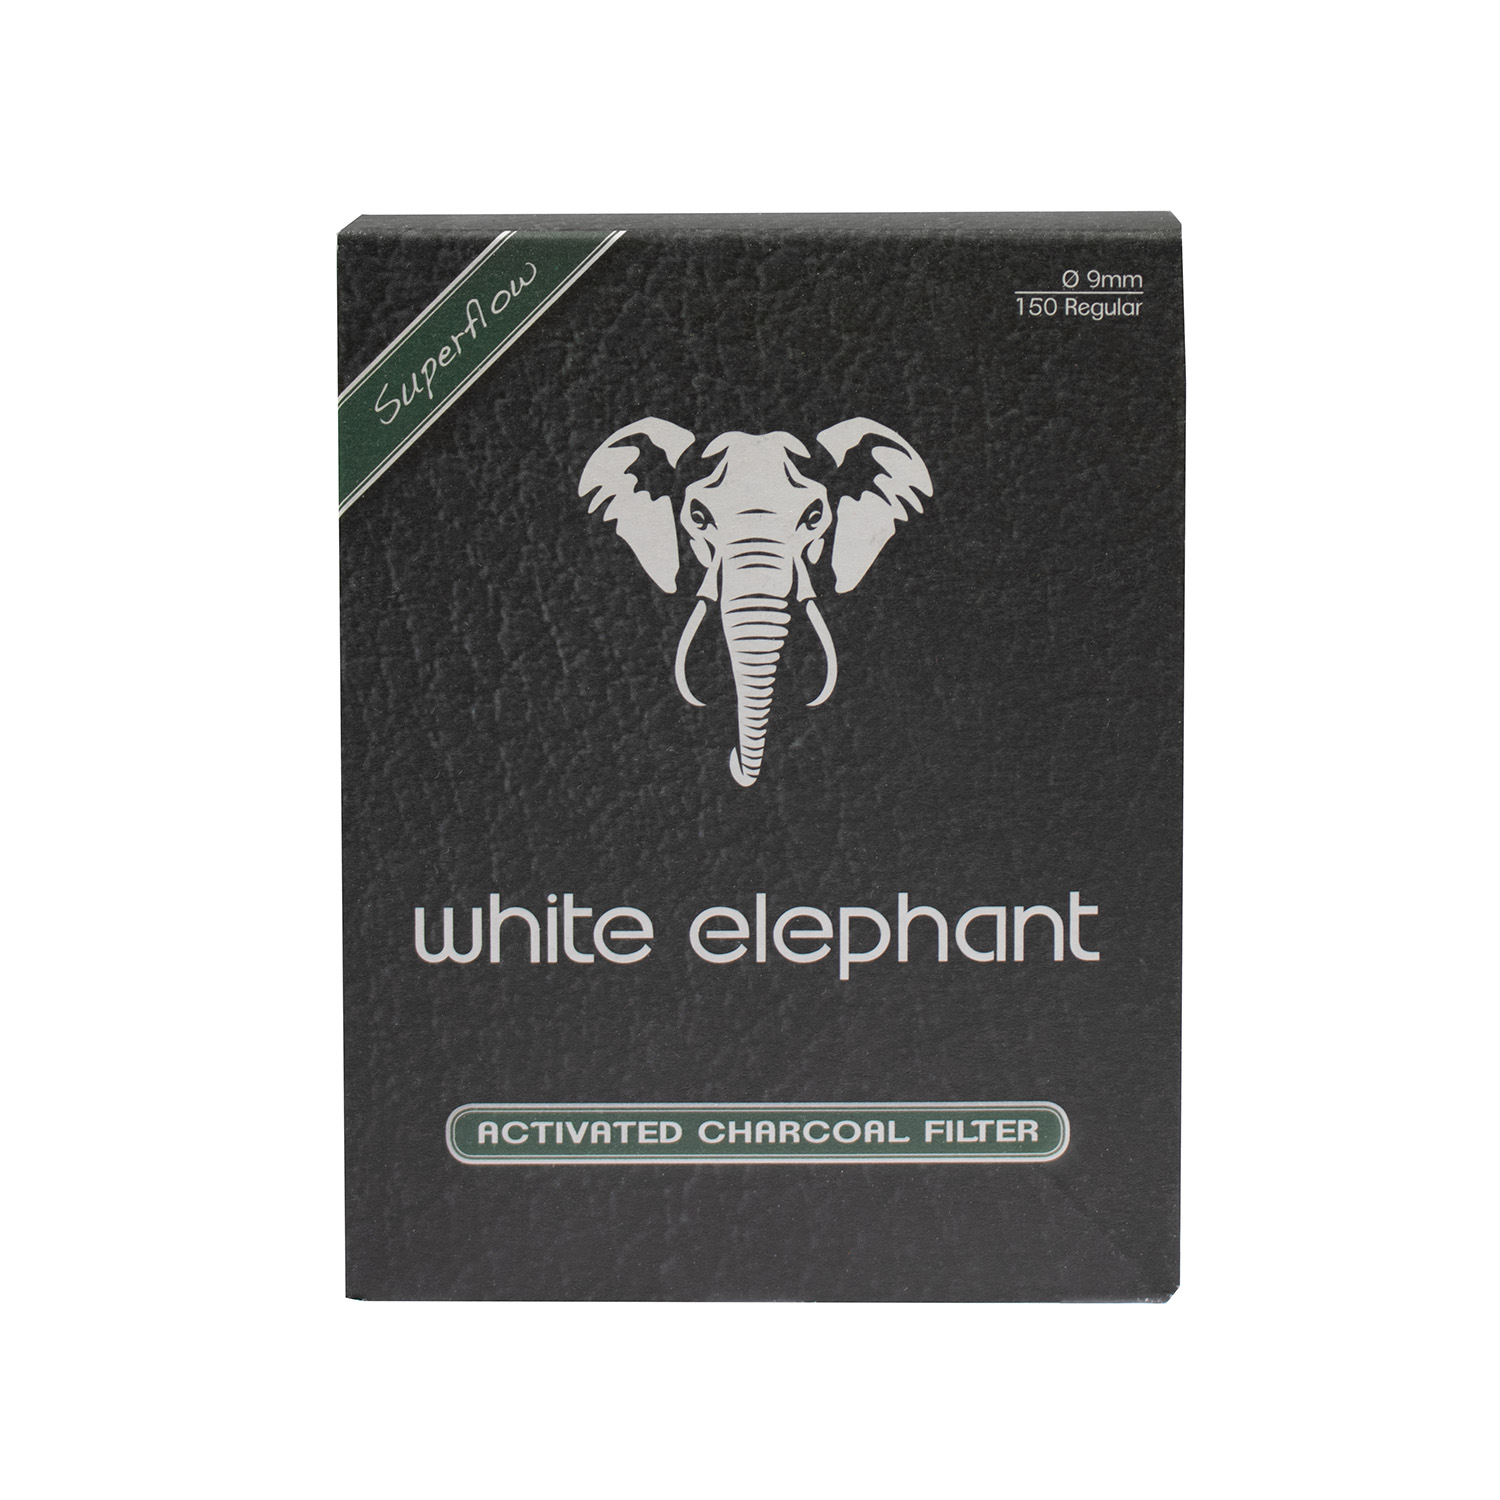 White Elephant Supermix Filter 9 mm